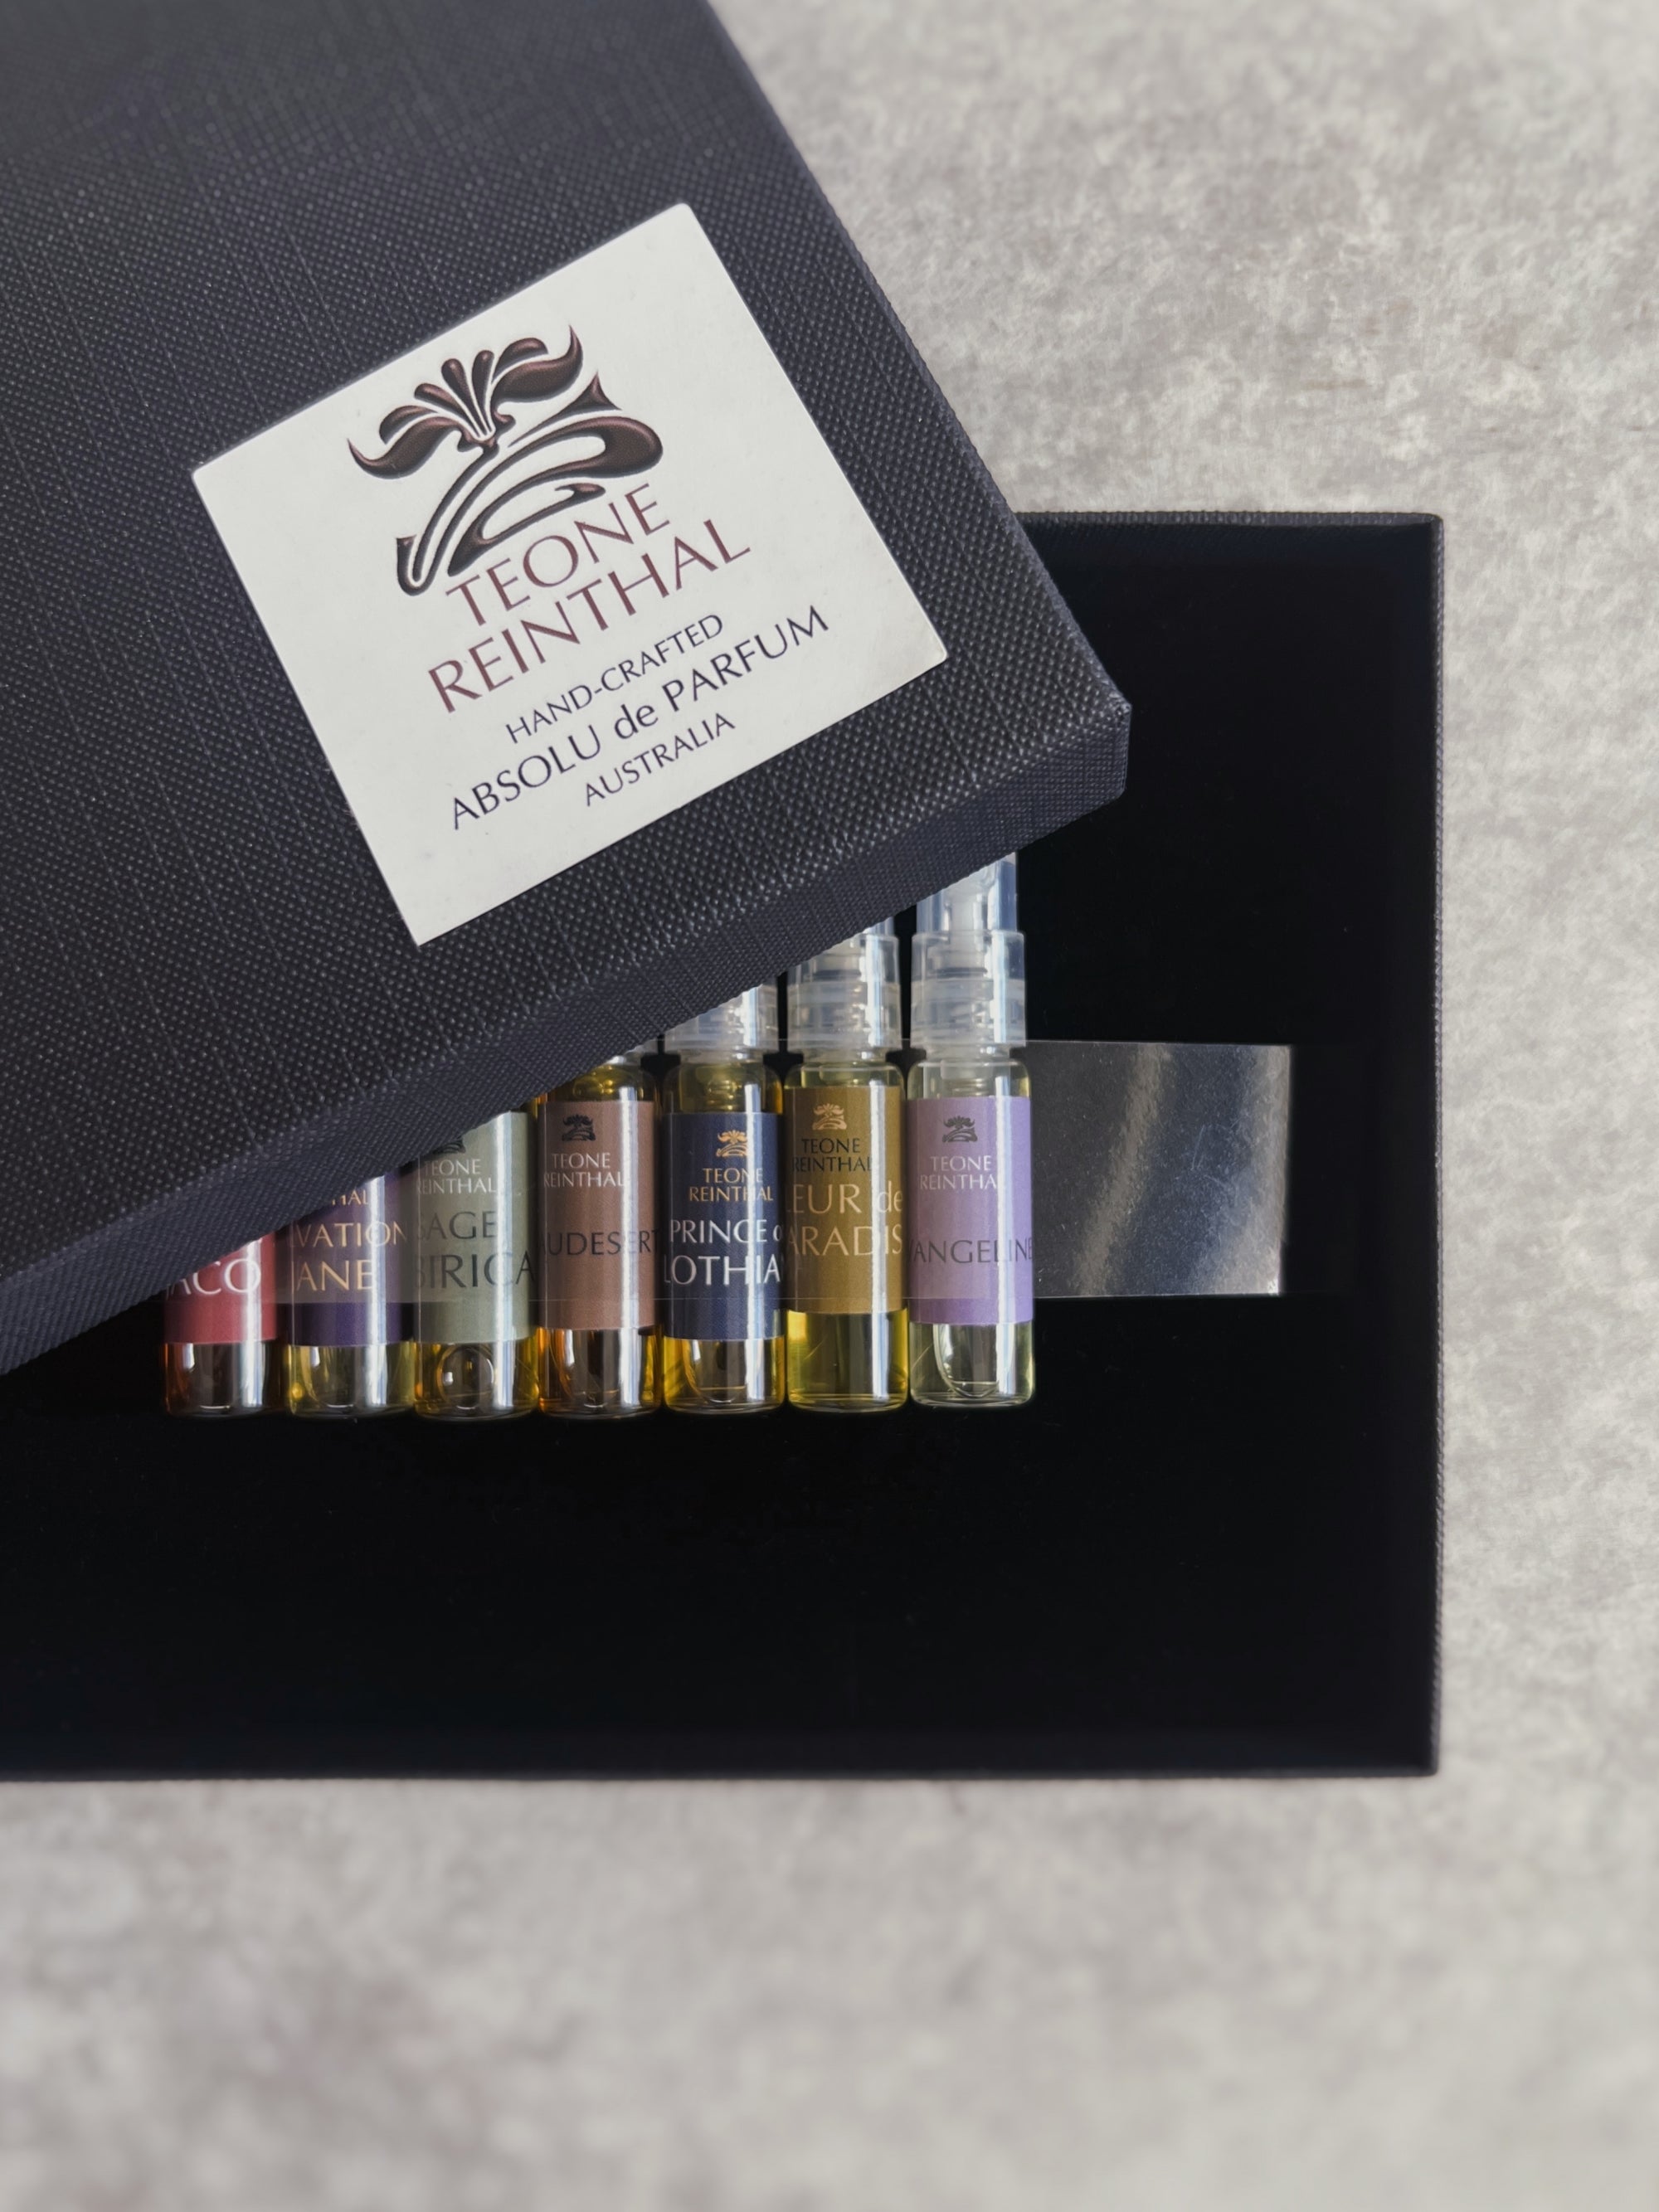 Teone Reinthal perfume : discovery set